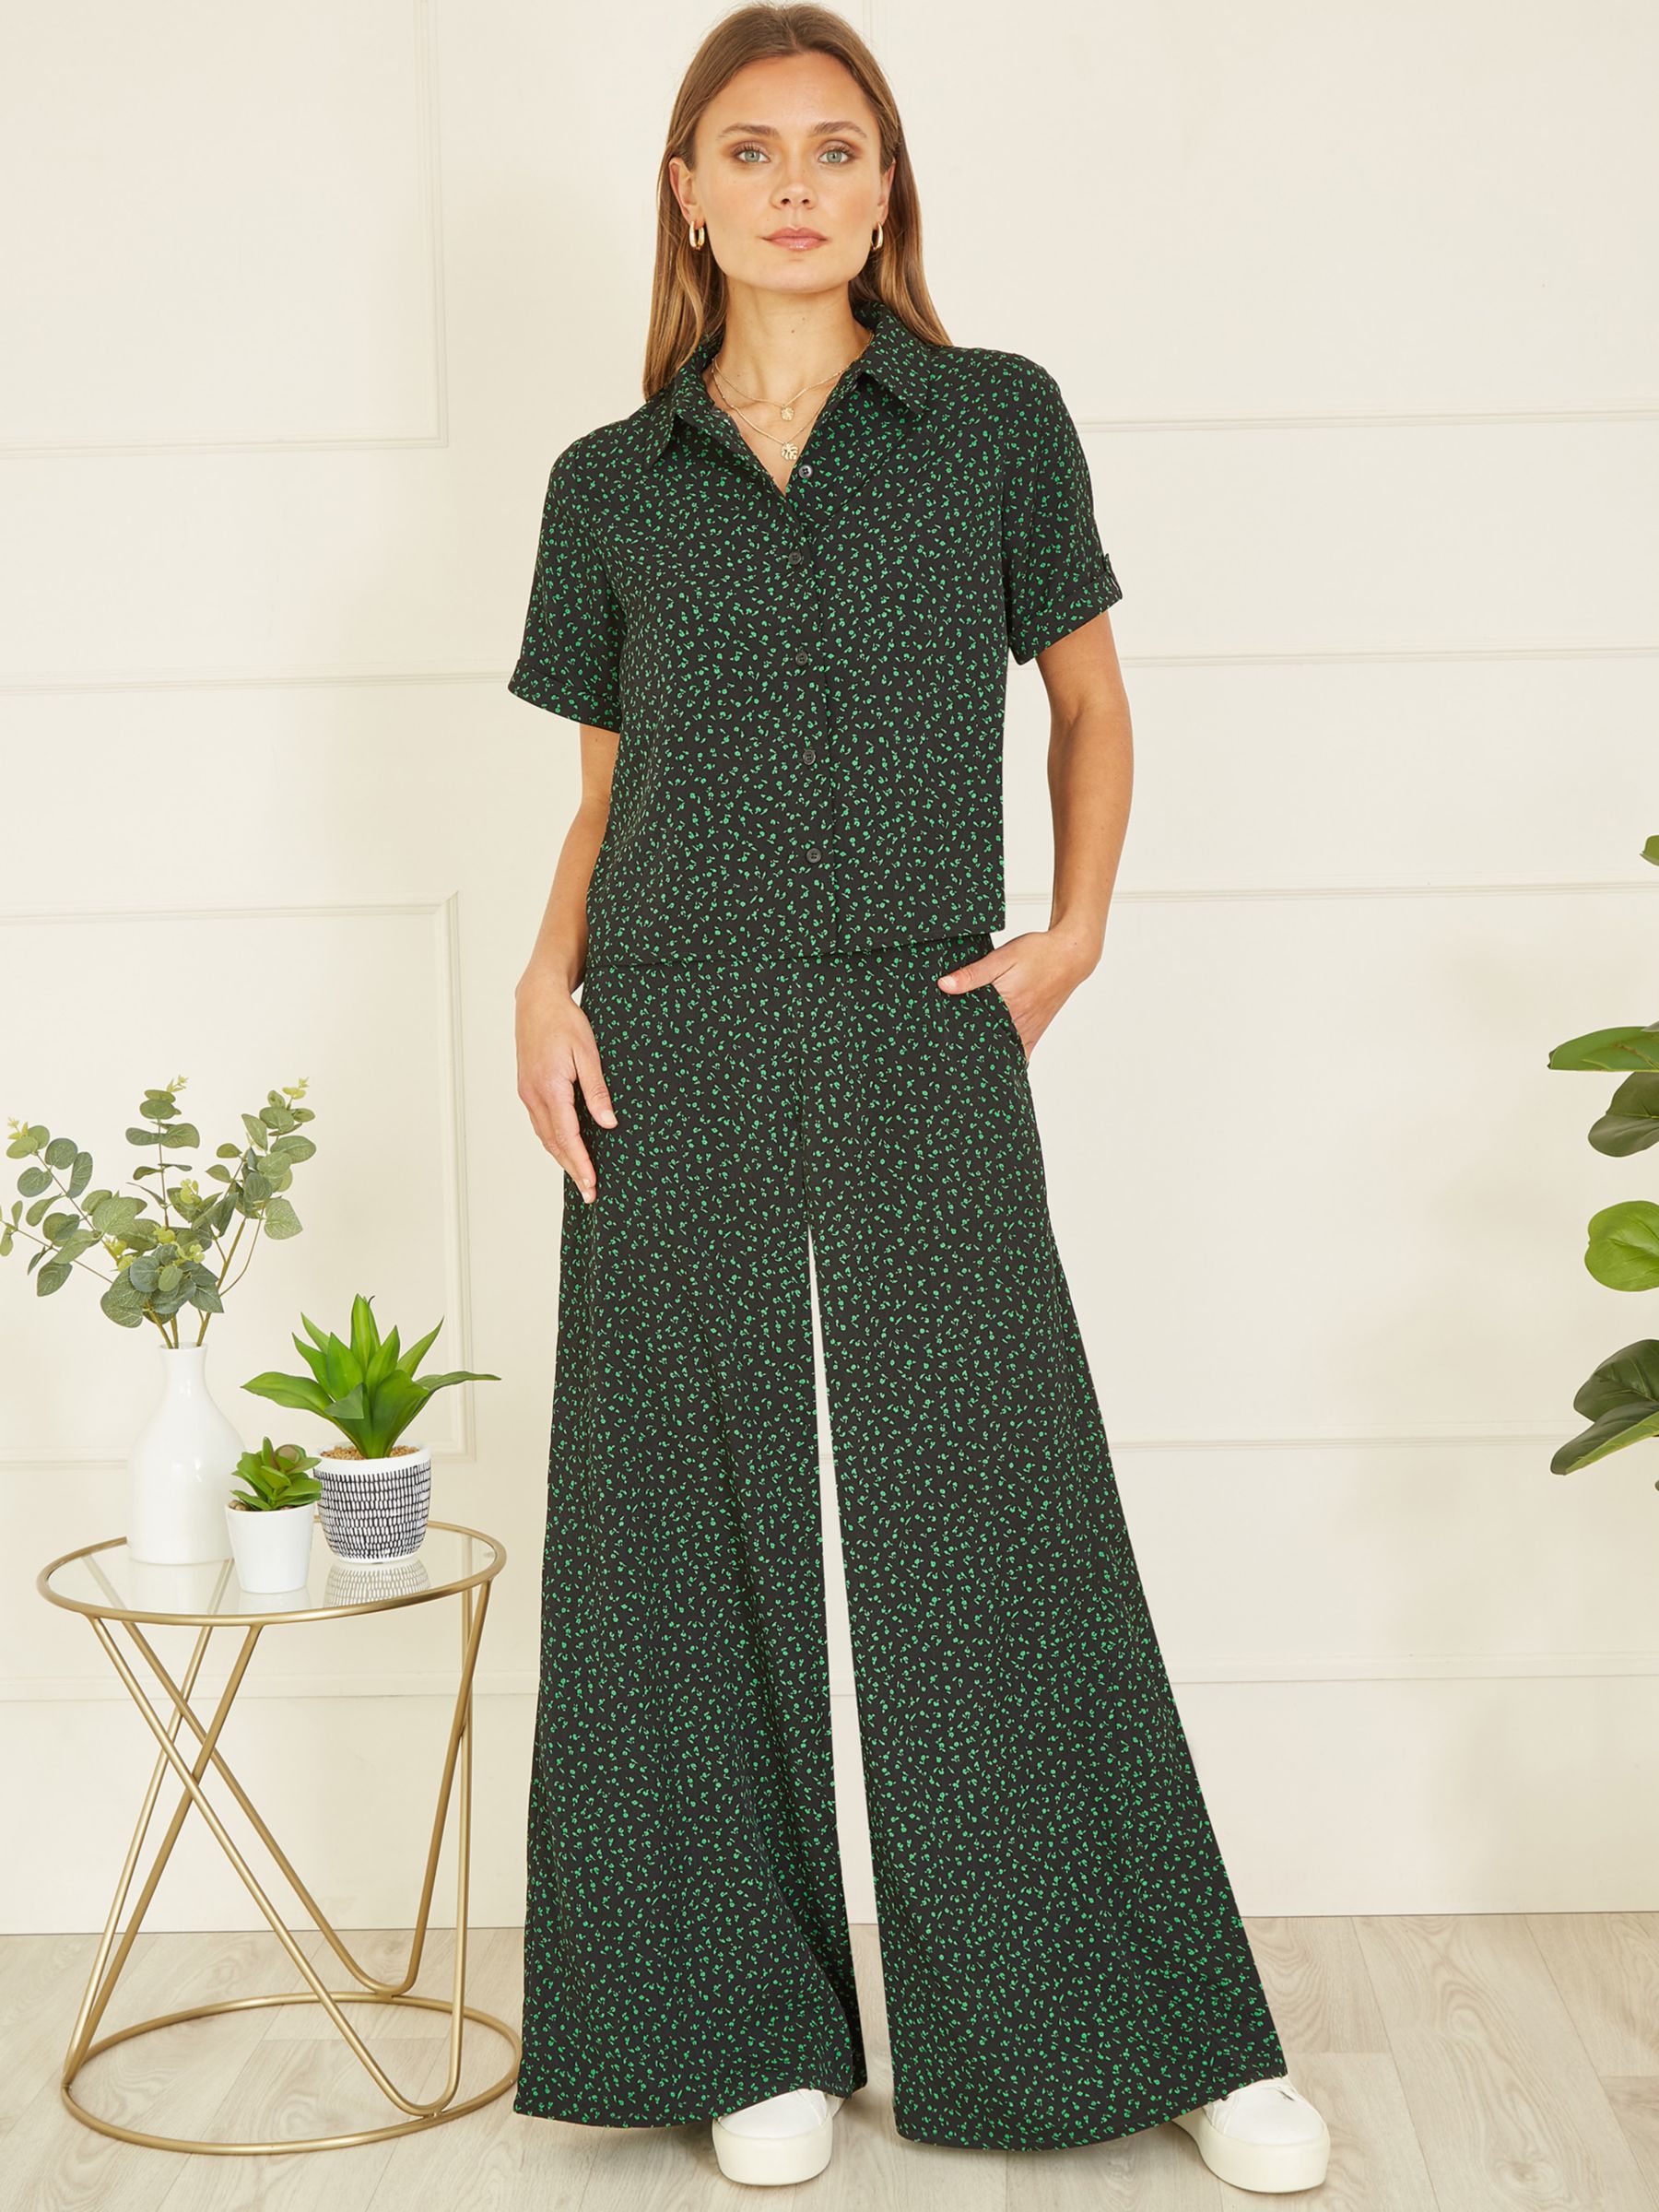 Yumi Ditsy Print Wide Leg Trousers, Black/Green, 8